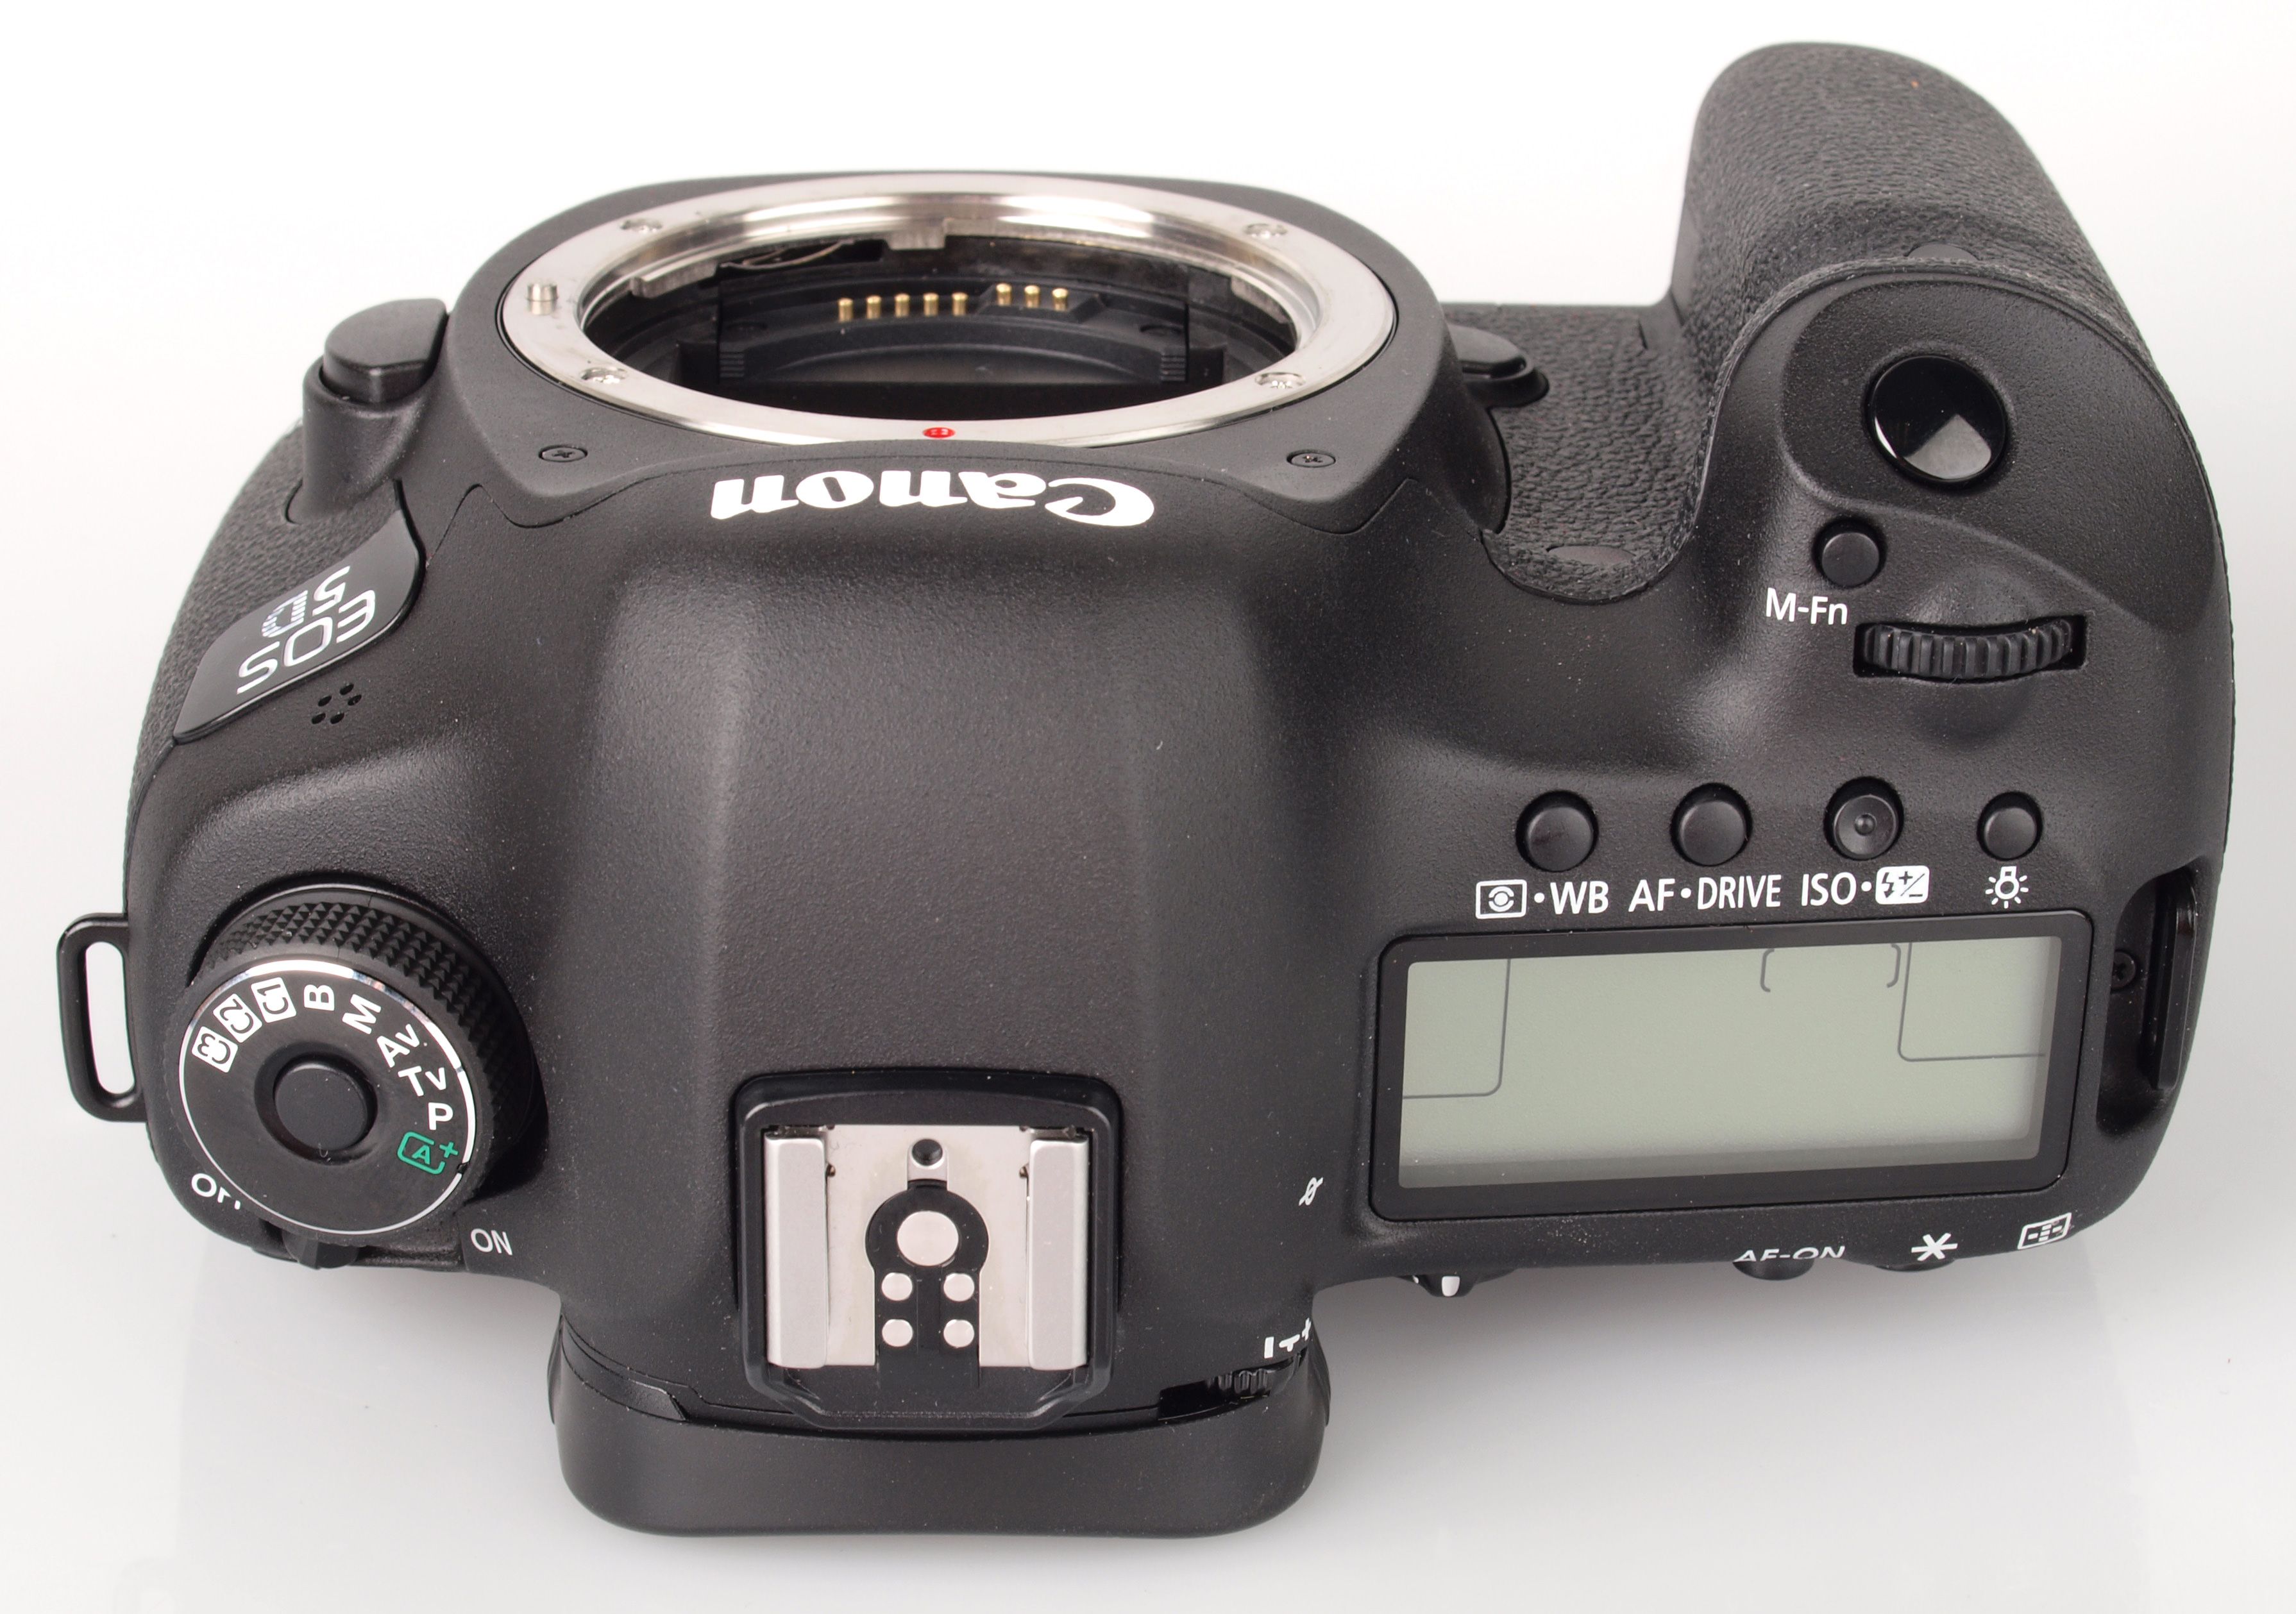 Canon EOS 5D Mark III Digital SLR Review